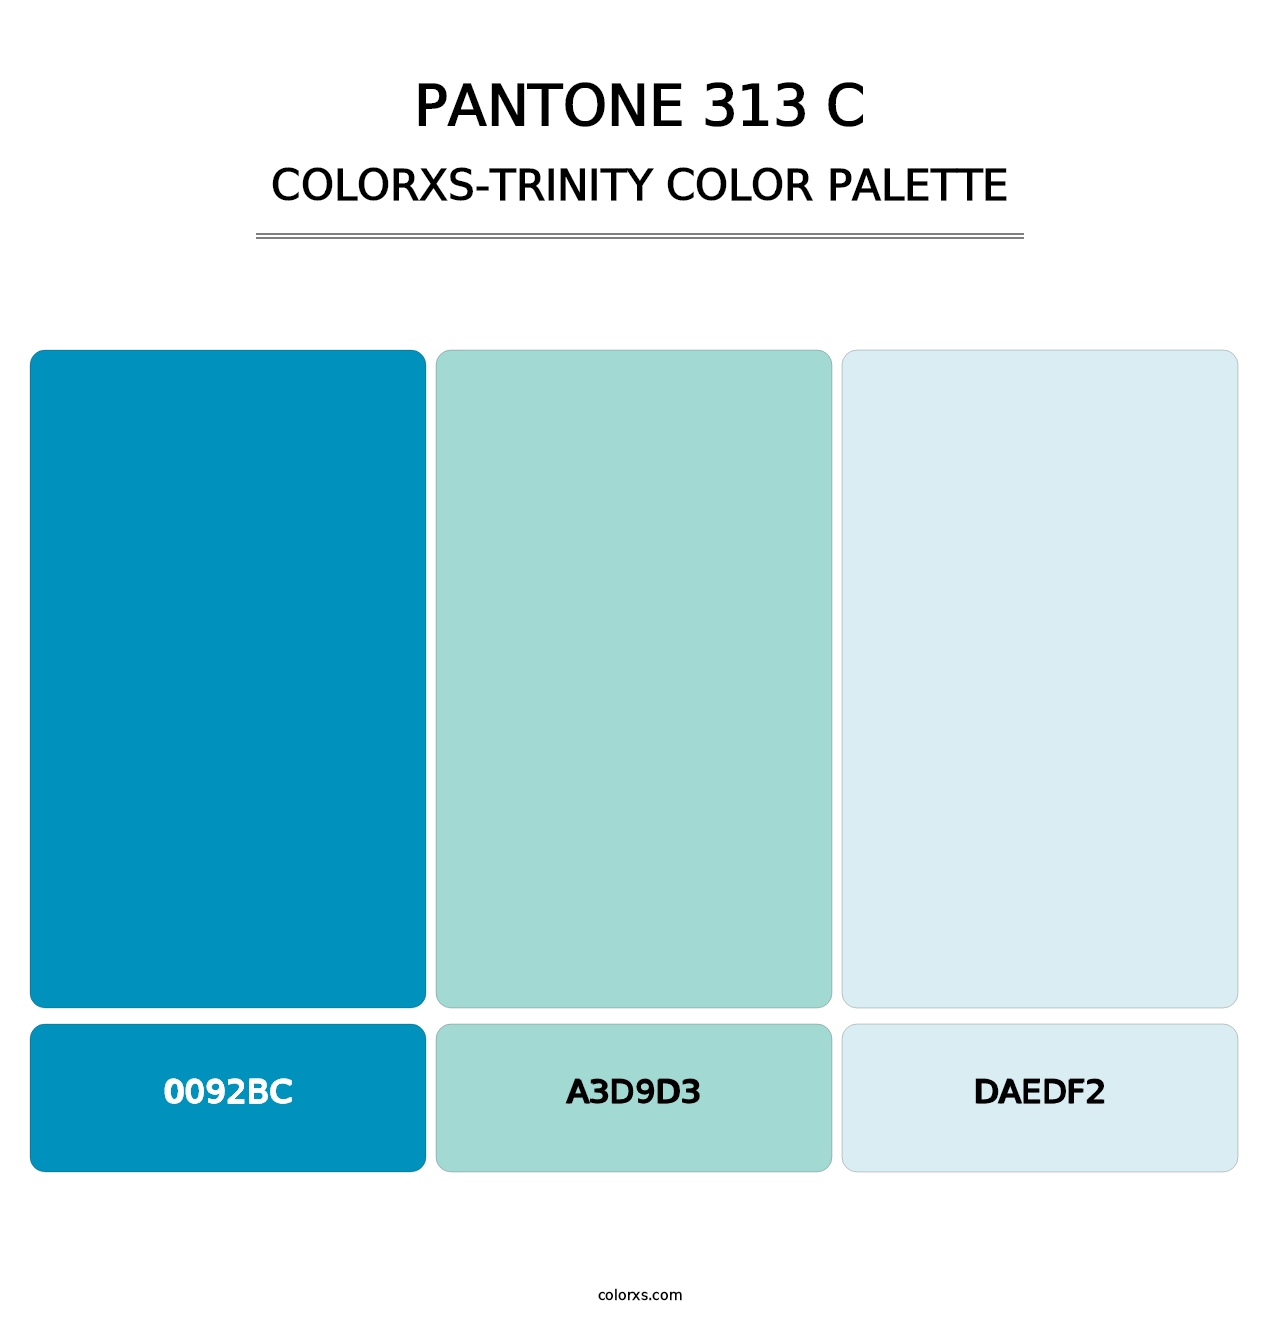 PANTONE 313 C - Colorxs Trinity Palette